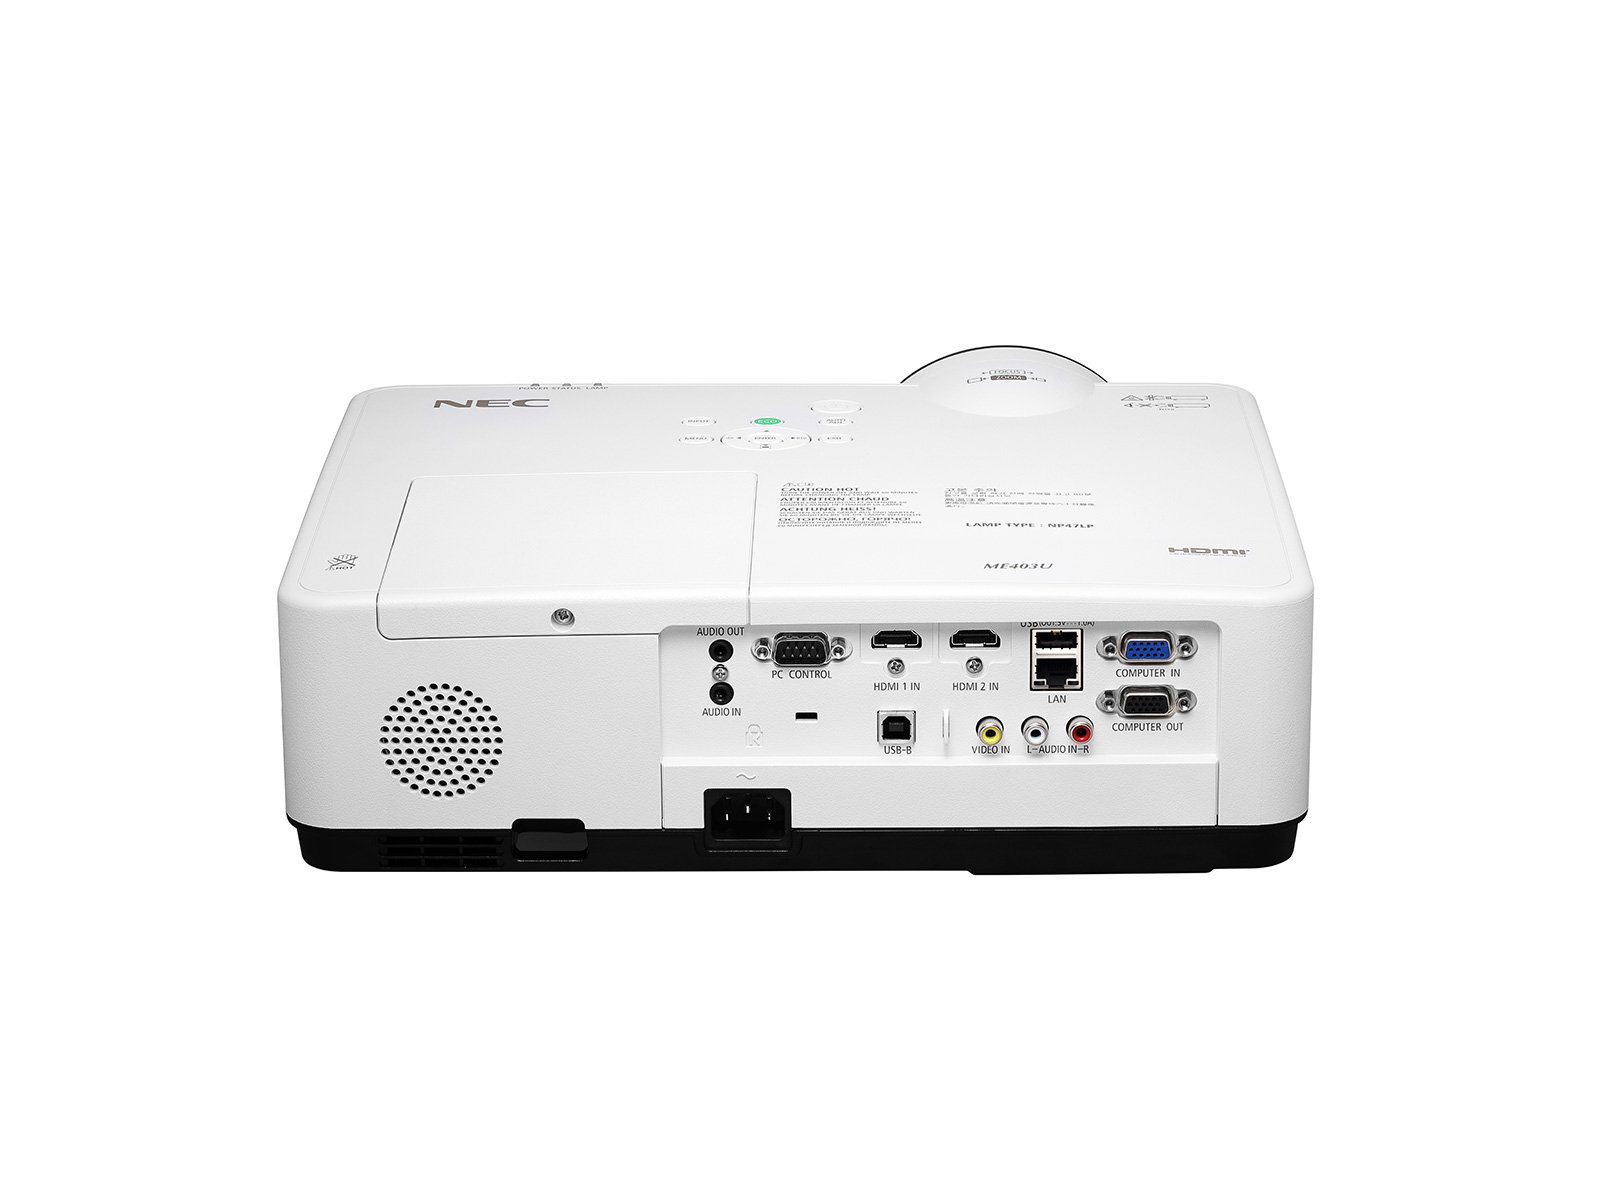 NEC ME403U - WUXGA - 4000 ANSI - LCD Projektor - Weiss